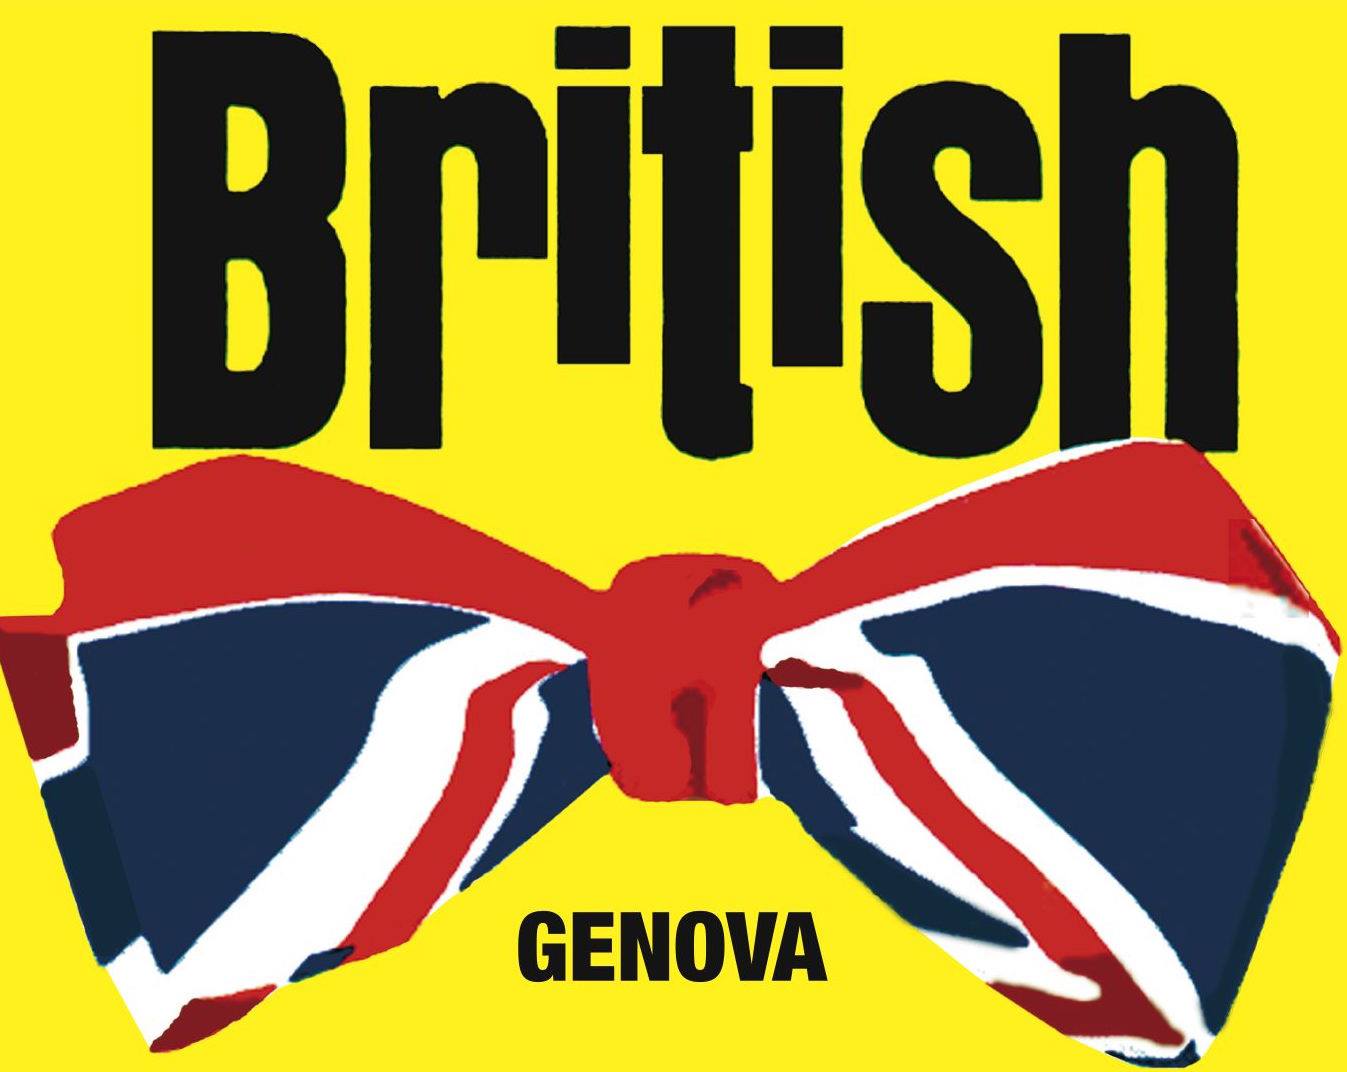 British Genova